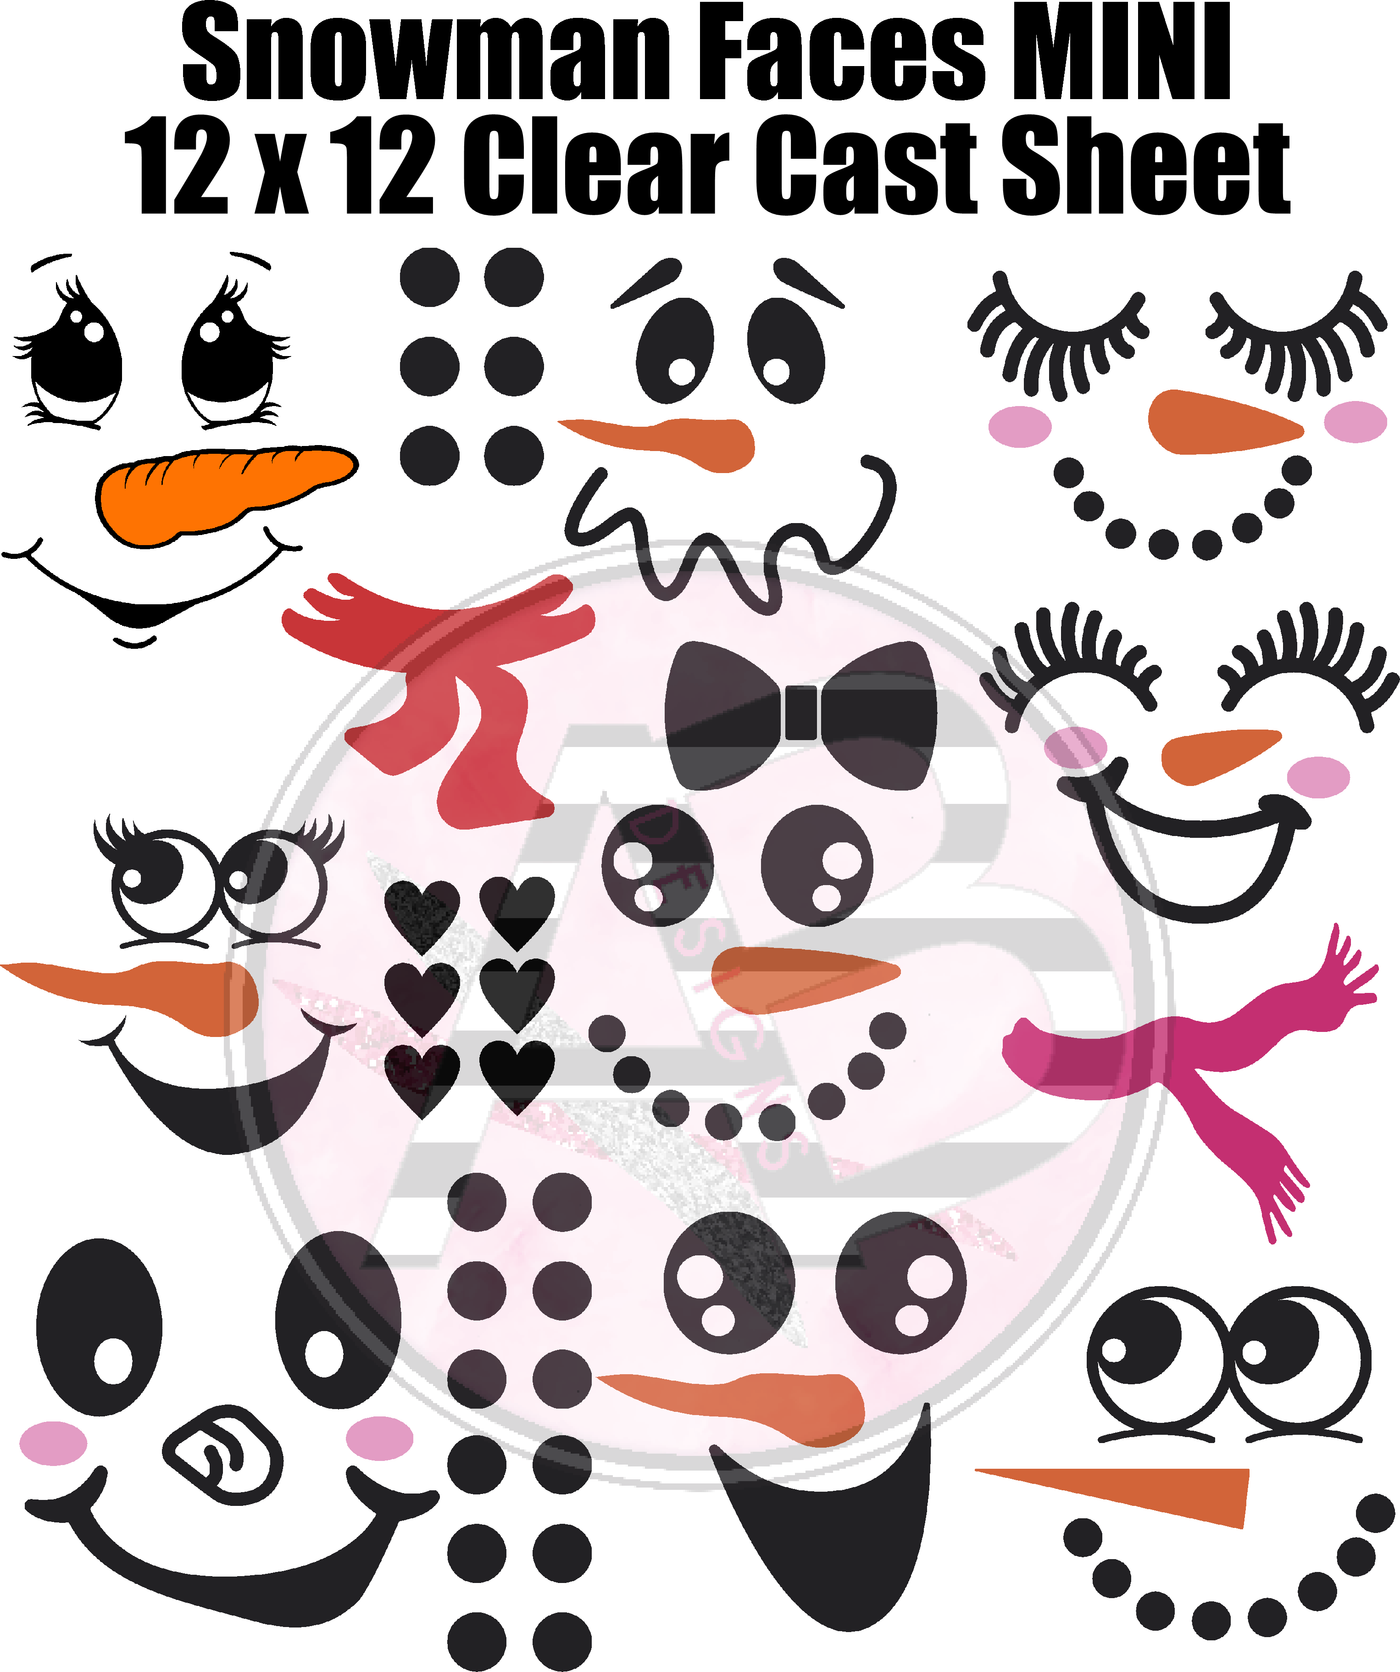 Snowman Faces Full Sheet 12x12 Clear Cast Decal